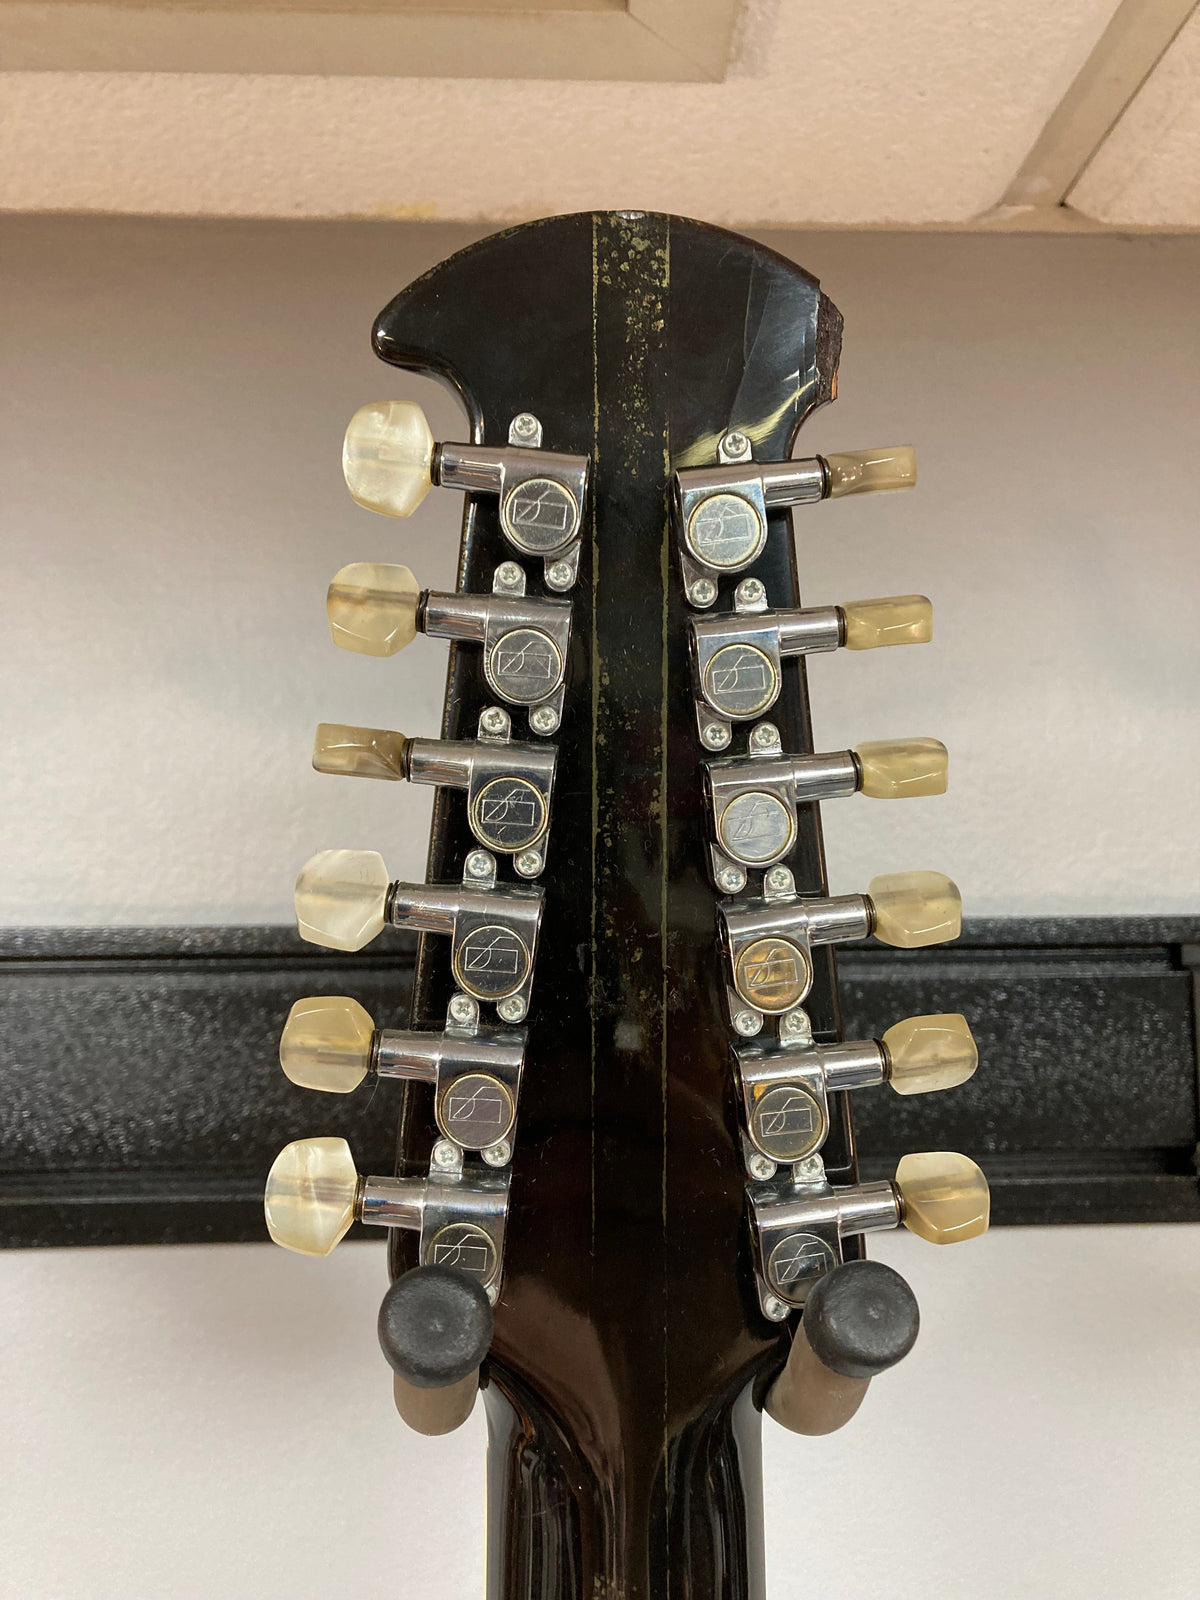 Ovation Deacon 12 - String Electric Guitar Black Guitars...